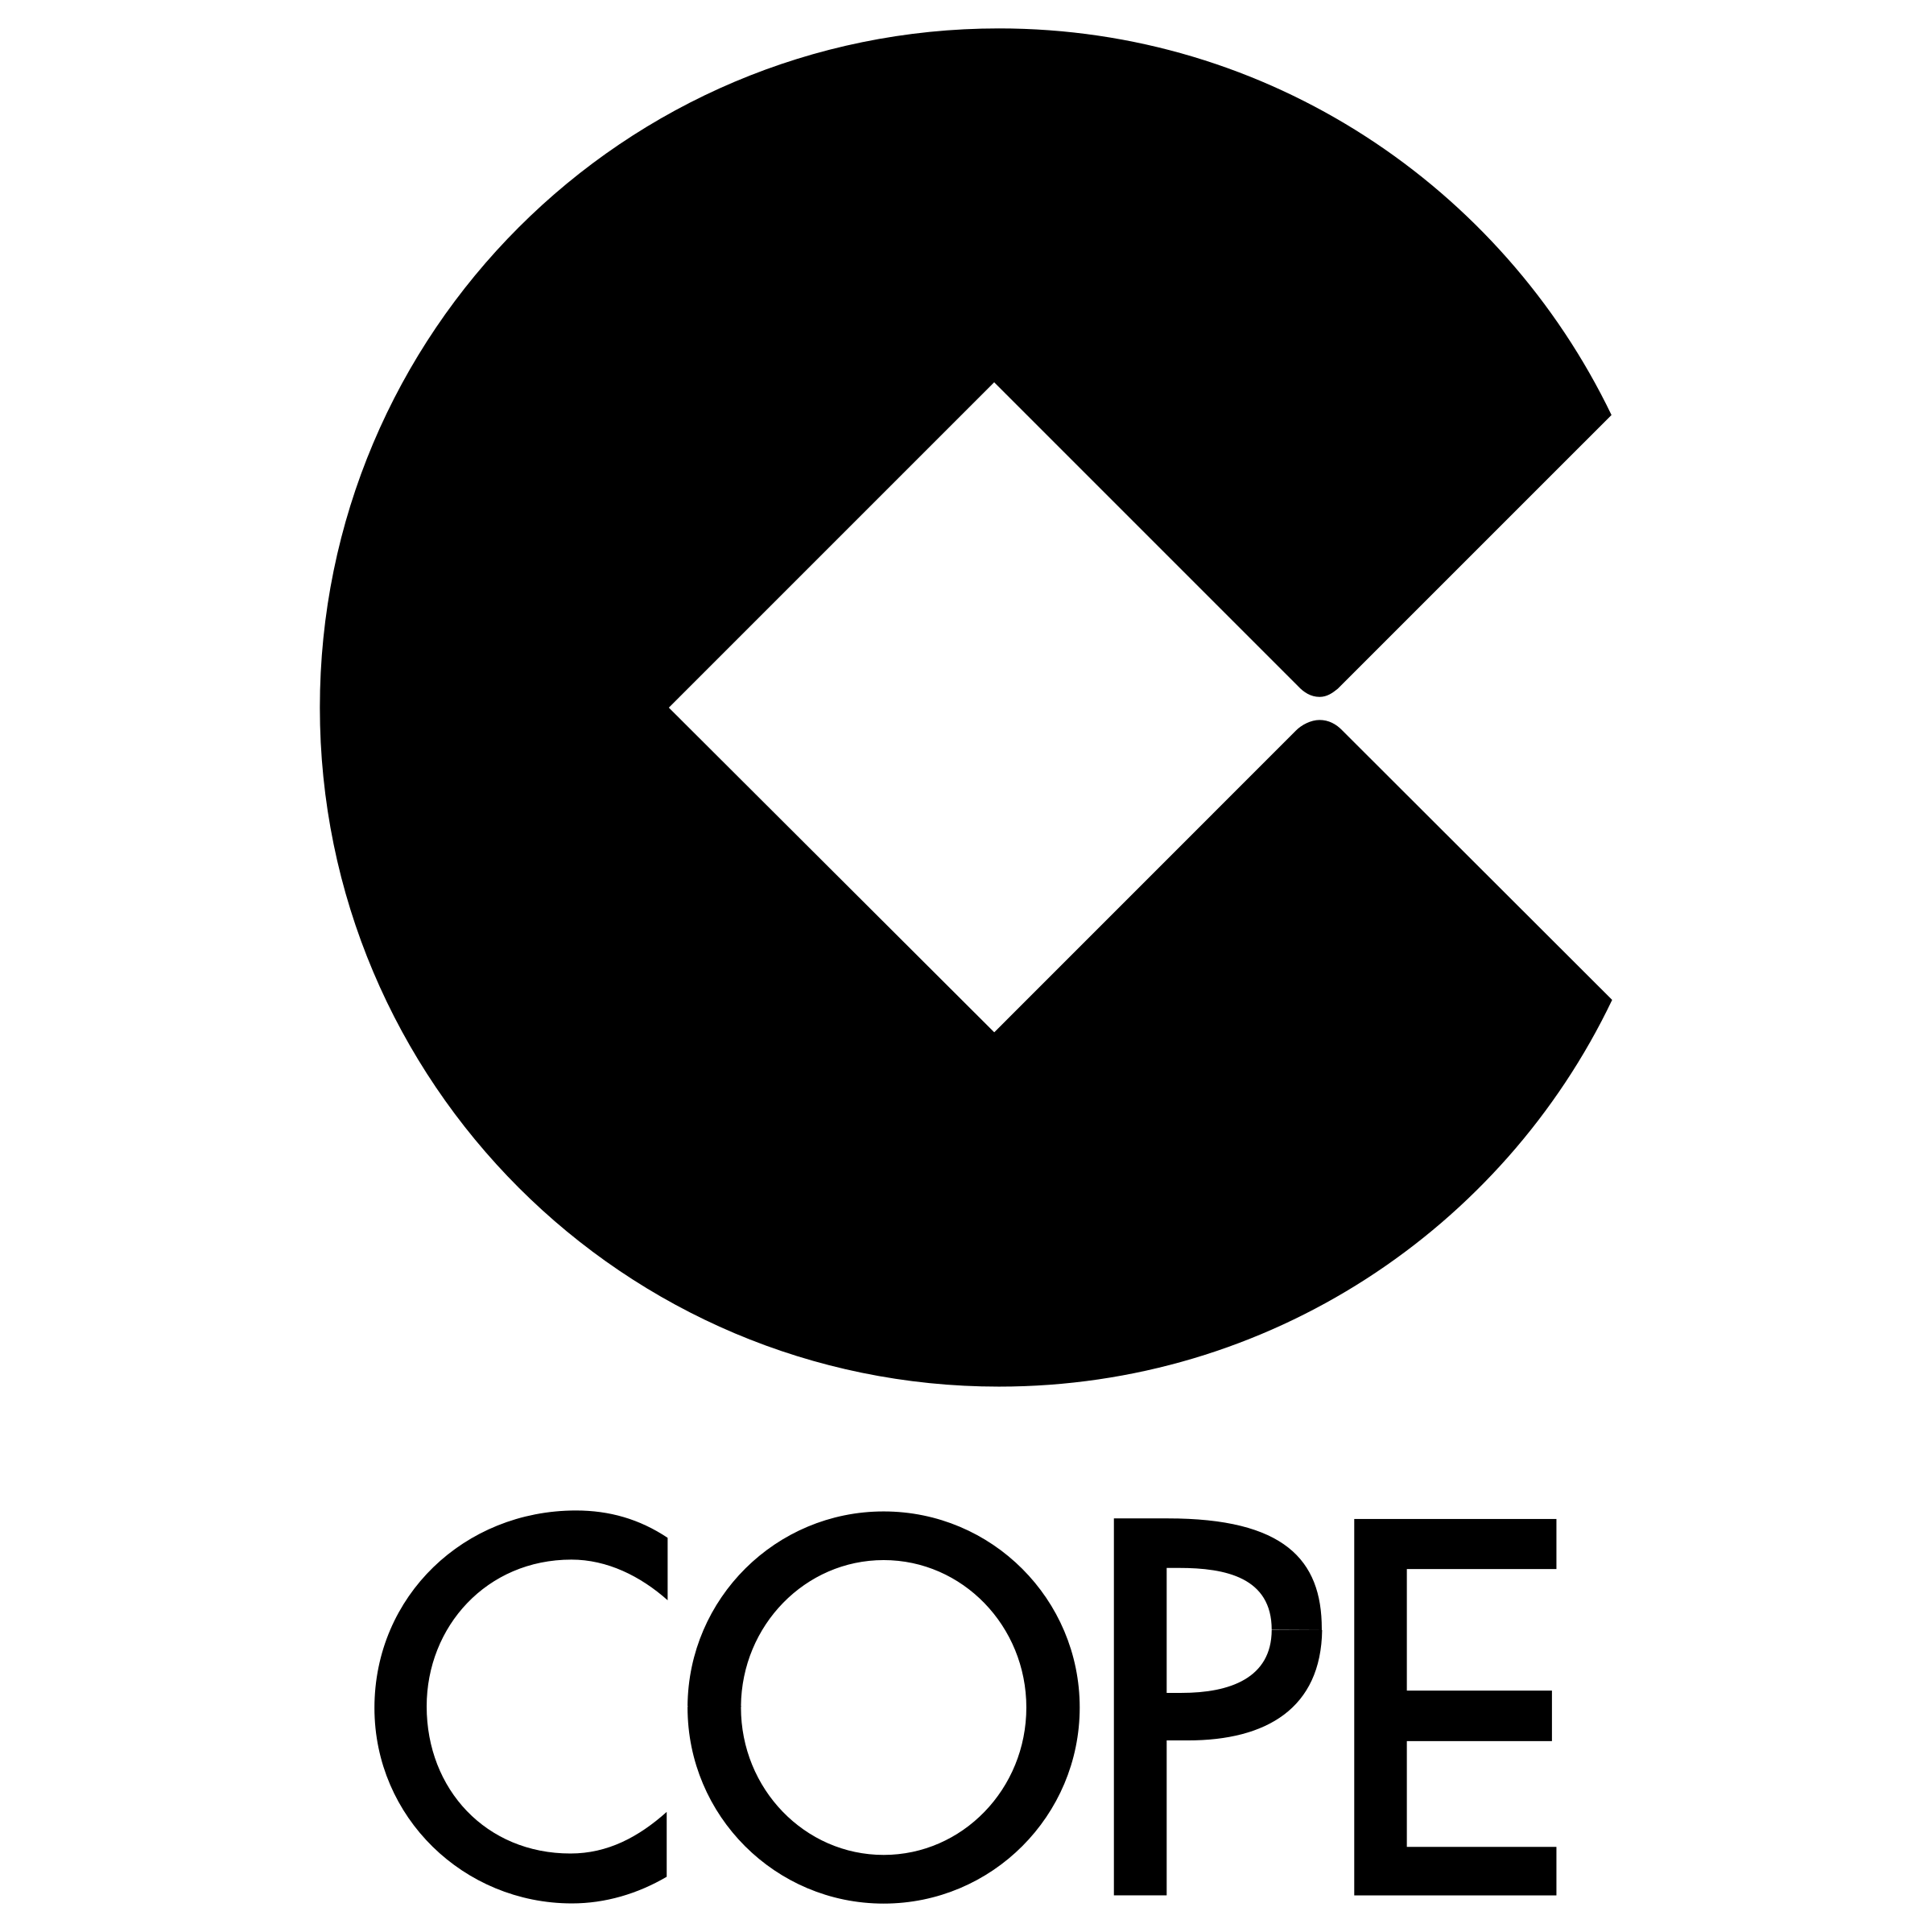 Cope Logo - Cope Logo PNG Transparent & SVG Vector